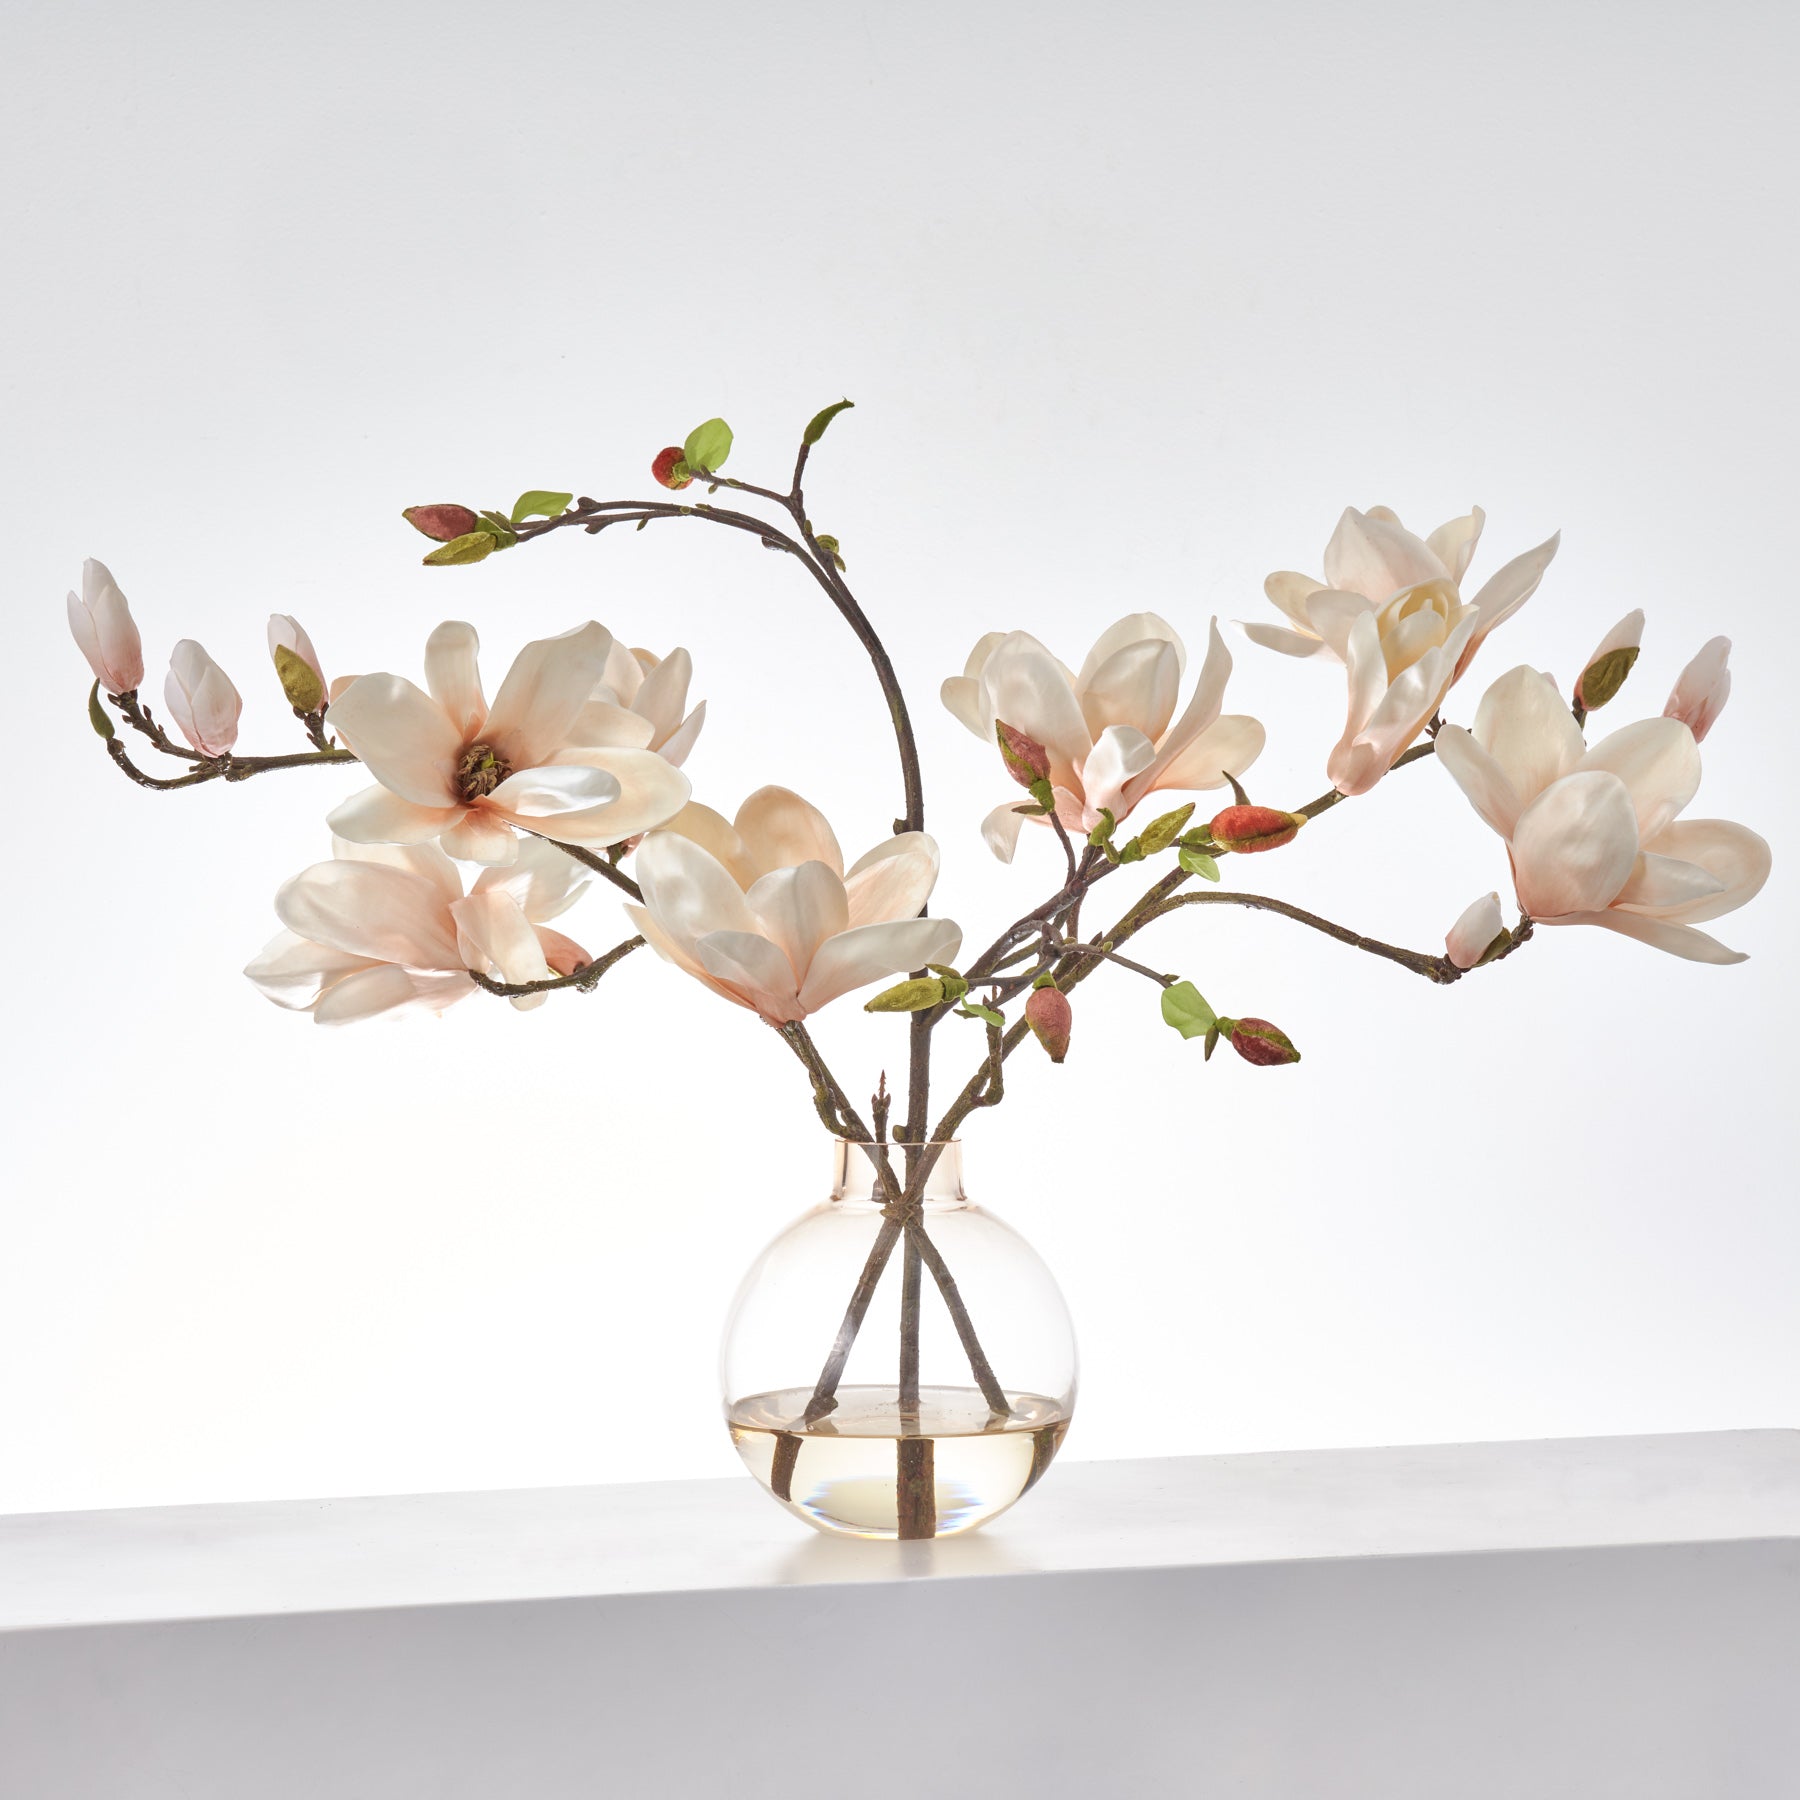 Vases Shop - Magnolia